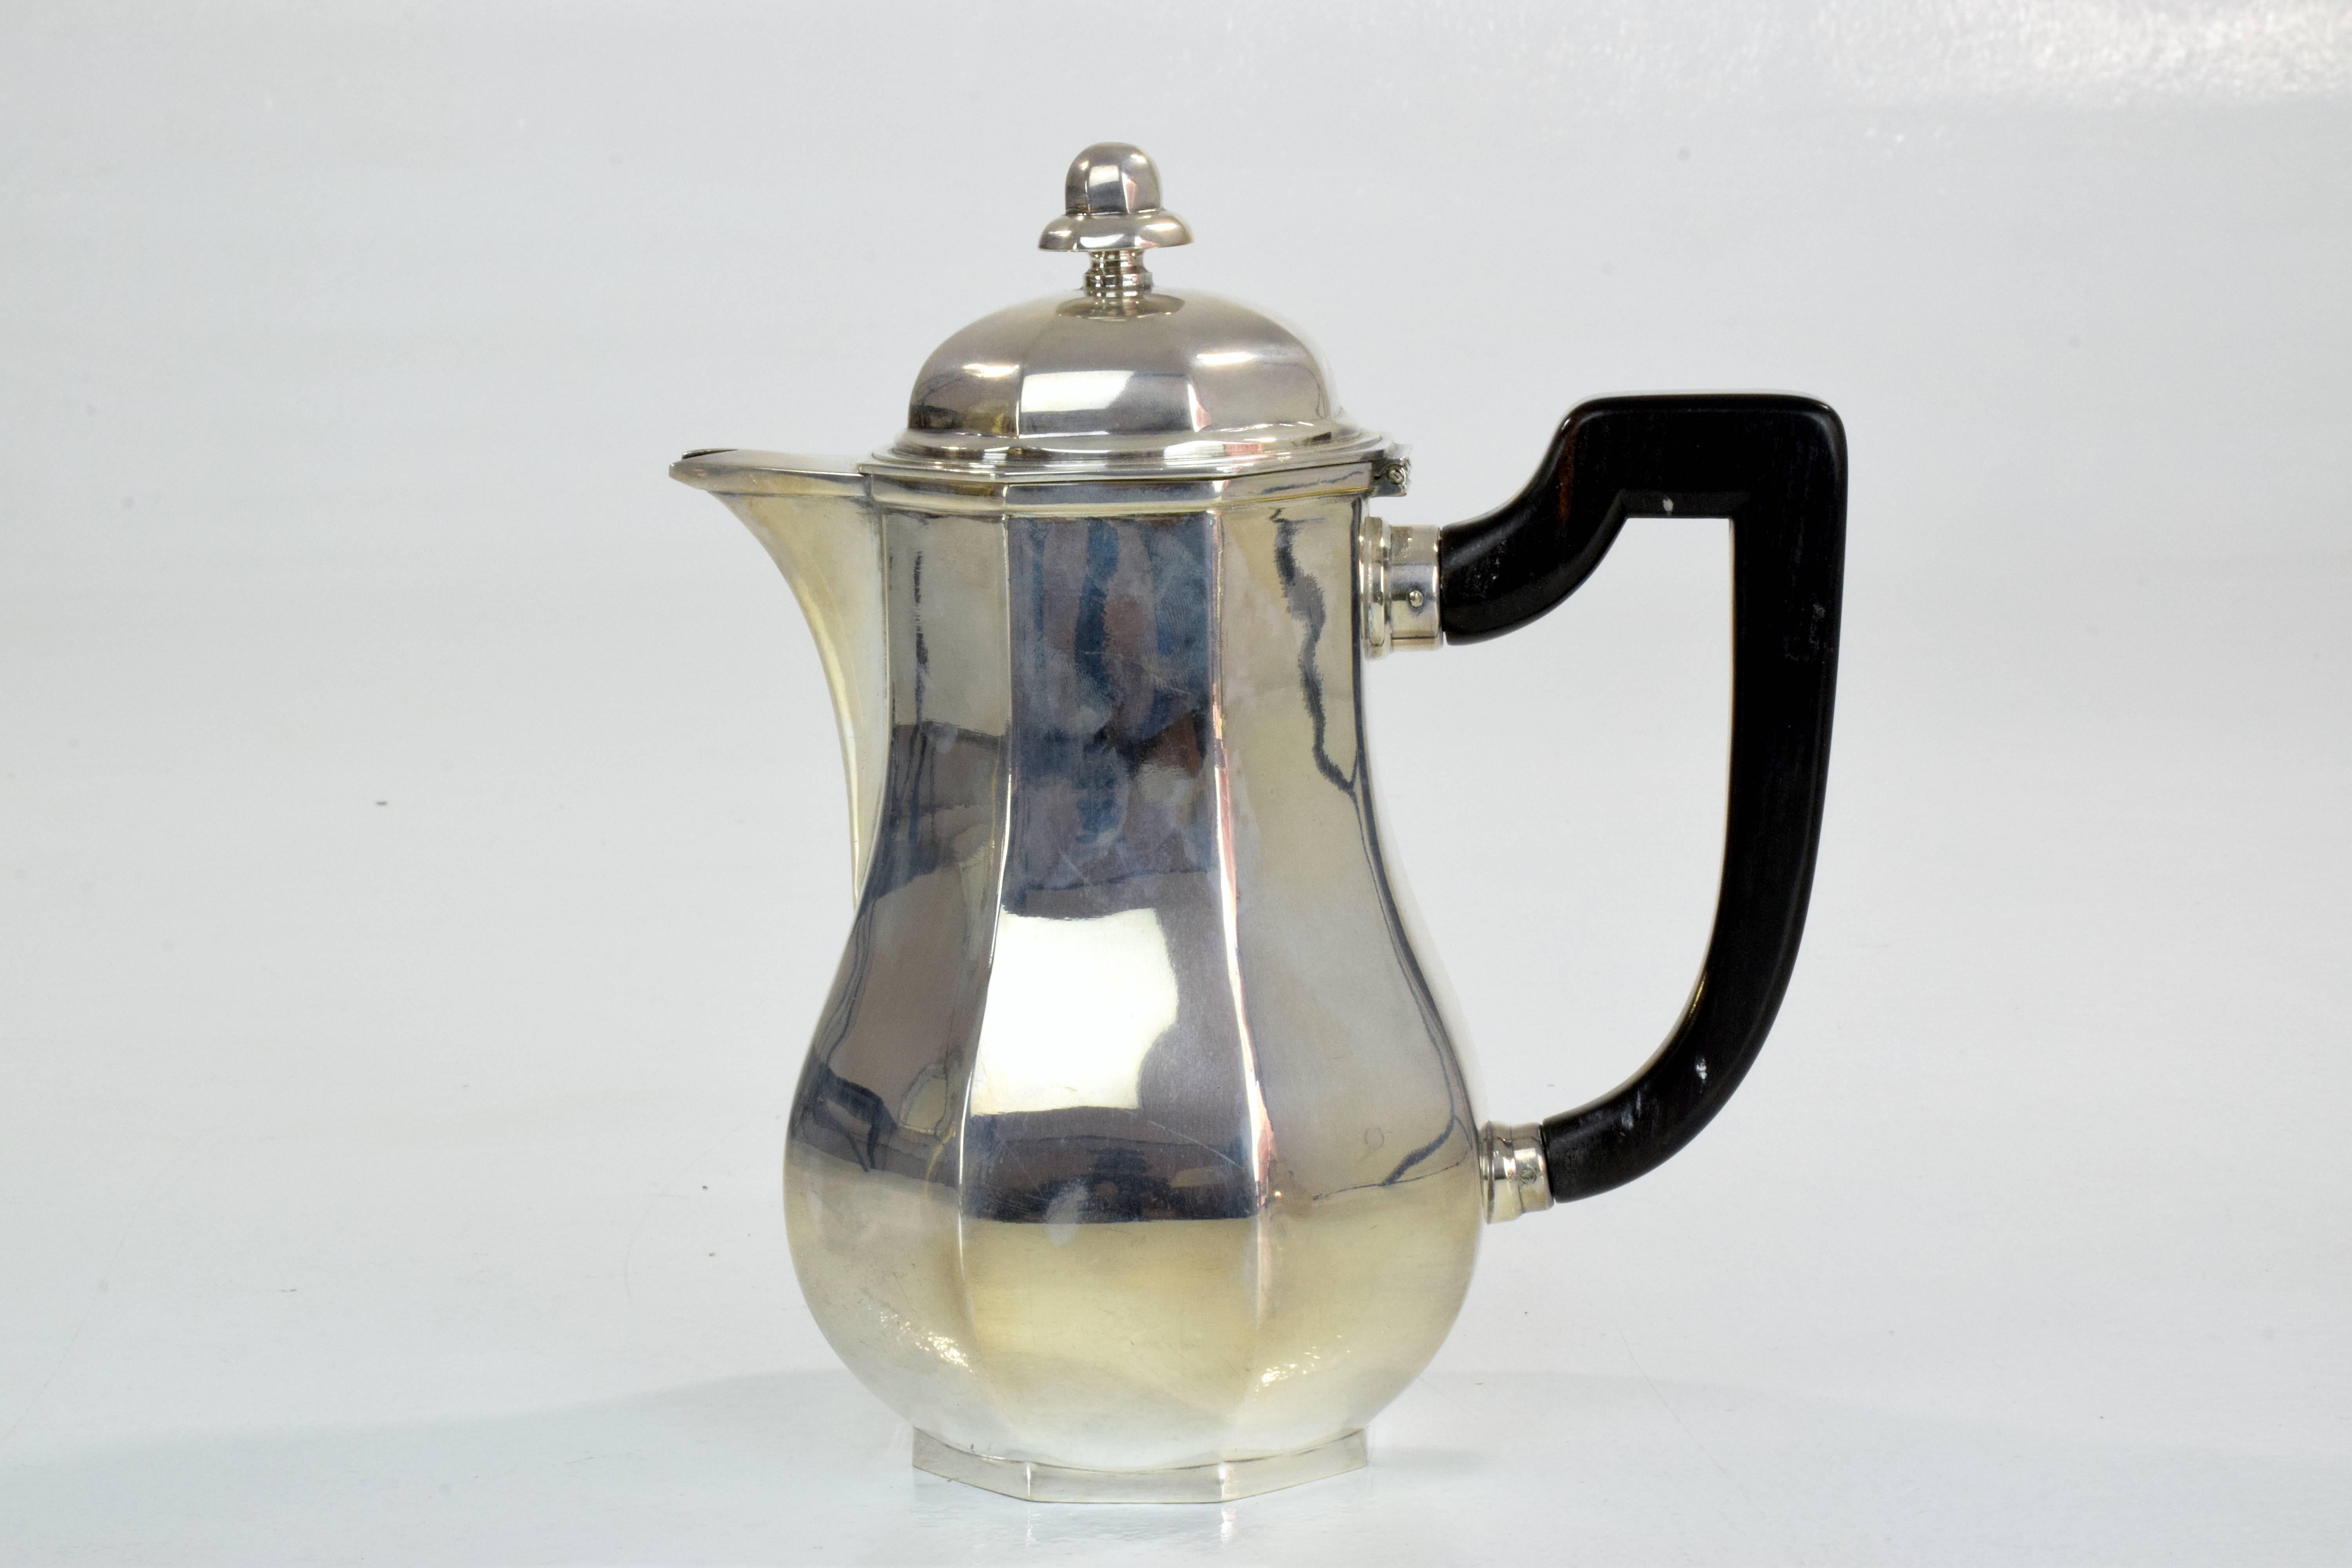 20th Century French Art Deco Silverware Tea Service by Ercuis, 1930-1940's